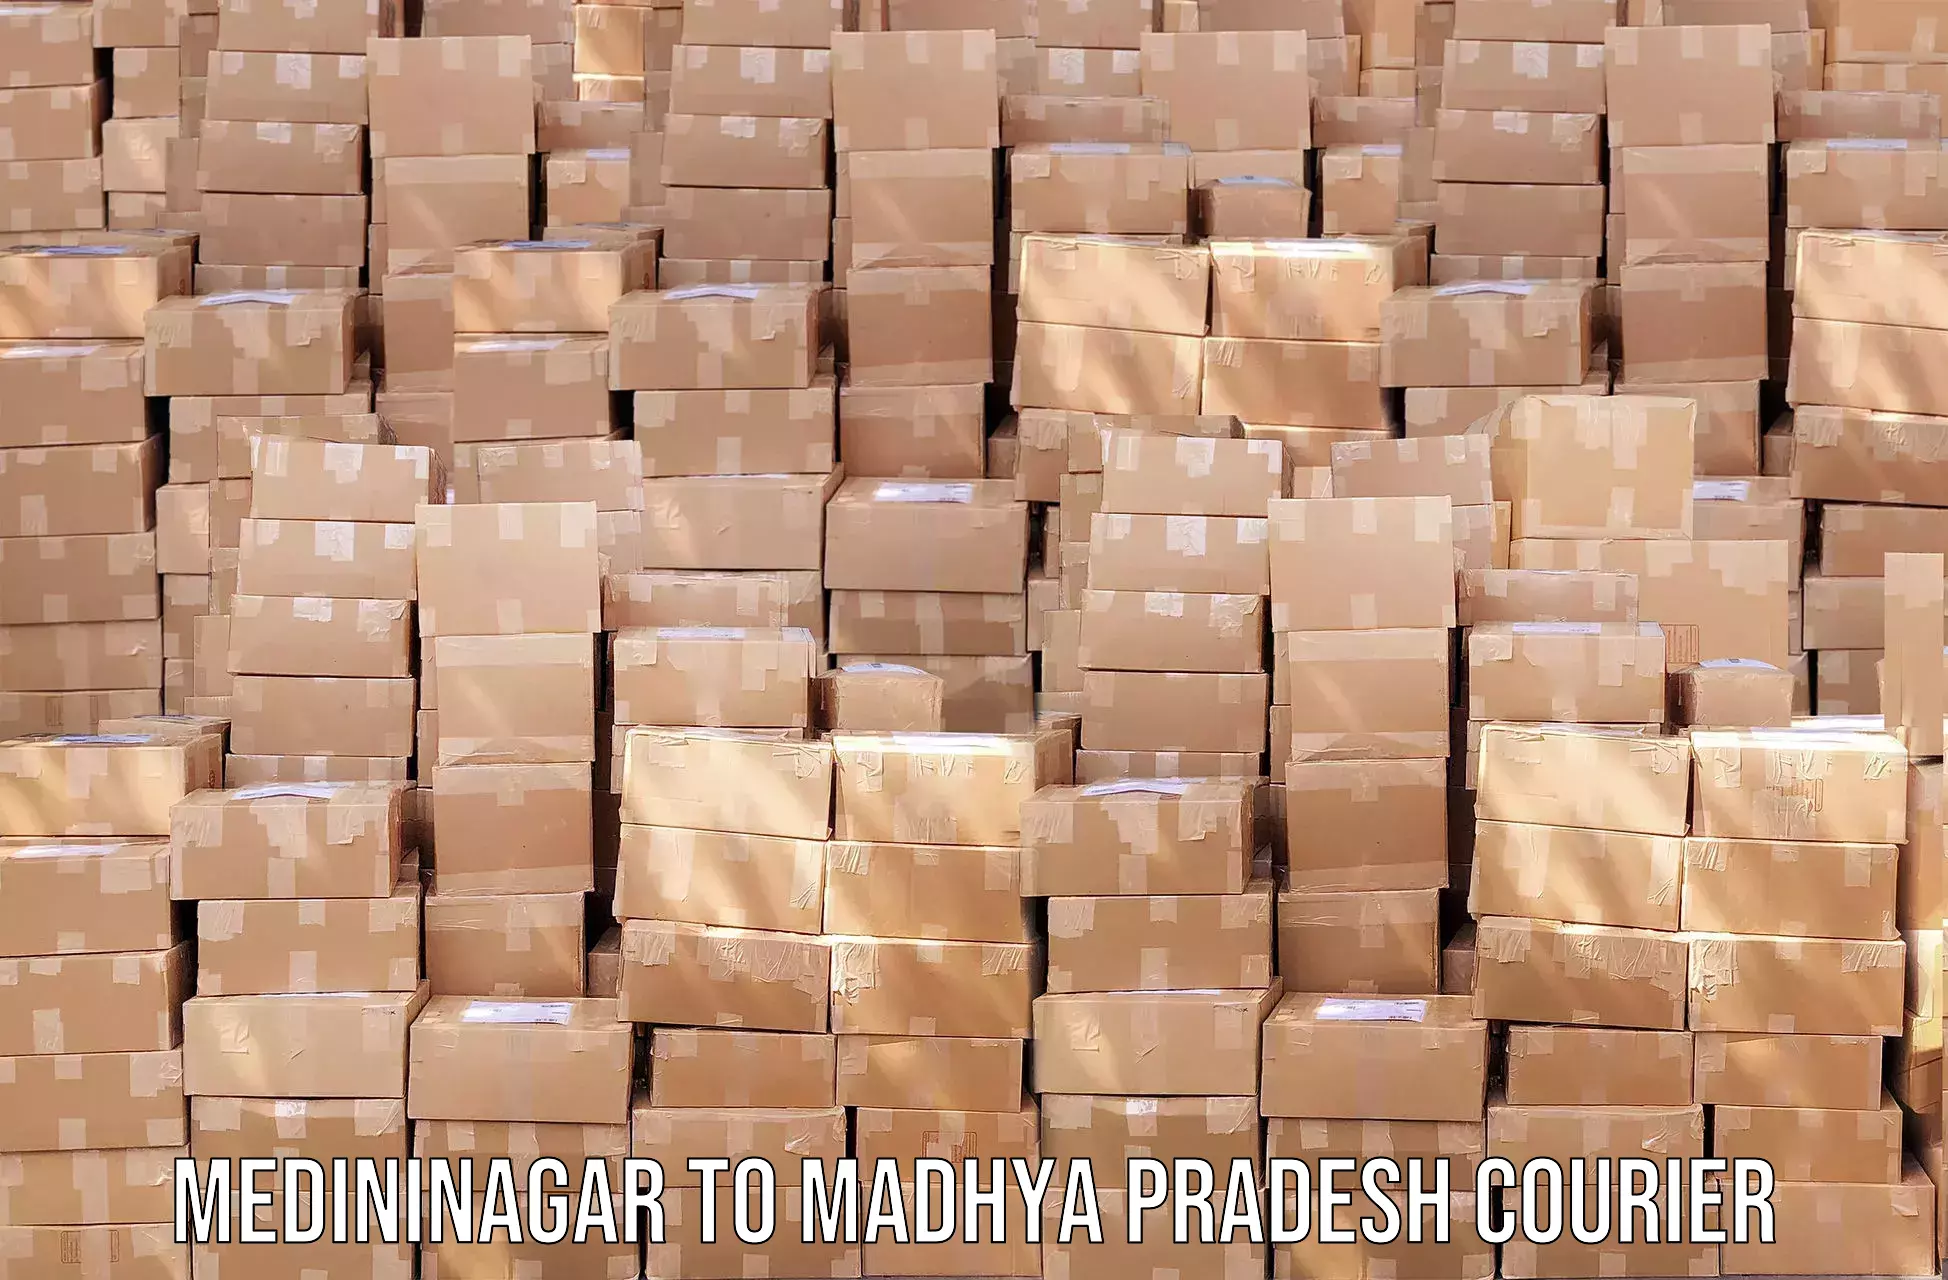 Pharmaceutical courier Medininagar to Tikamgarh